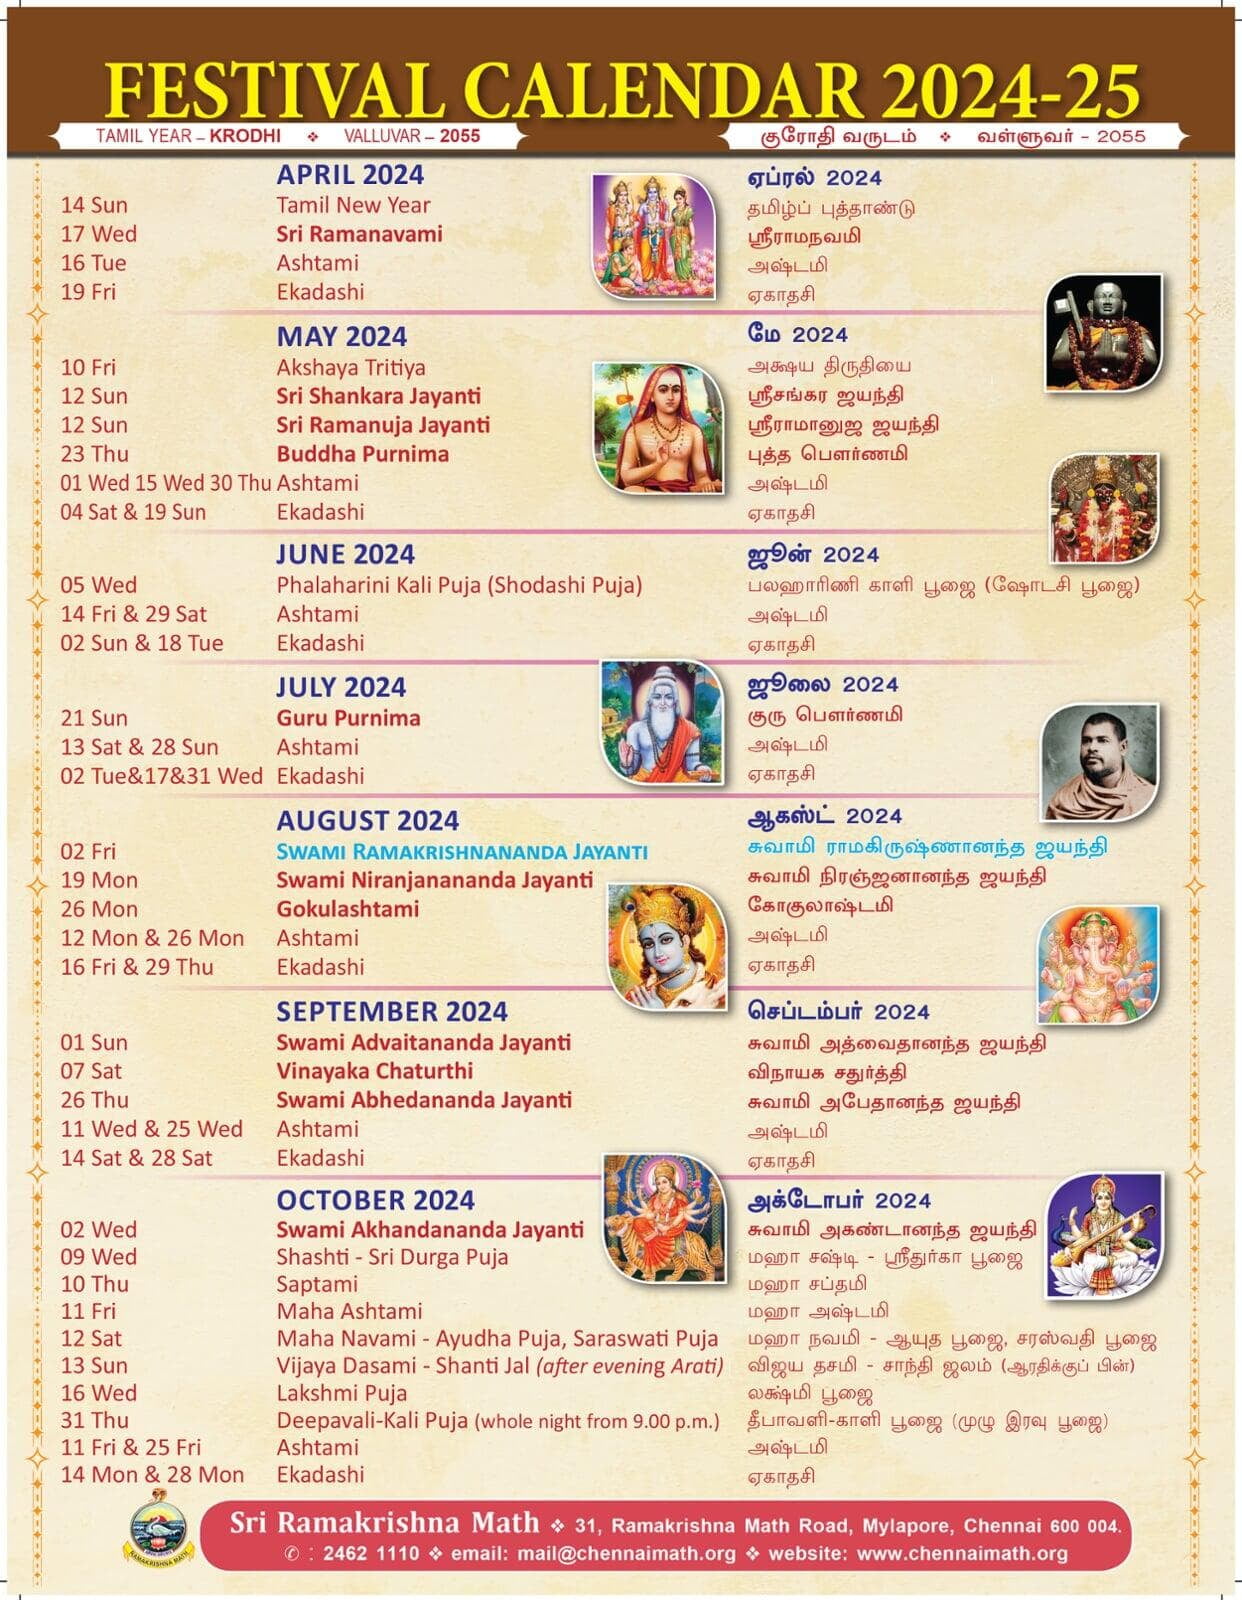 Festival Calendar 2024-25